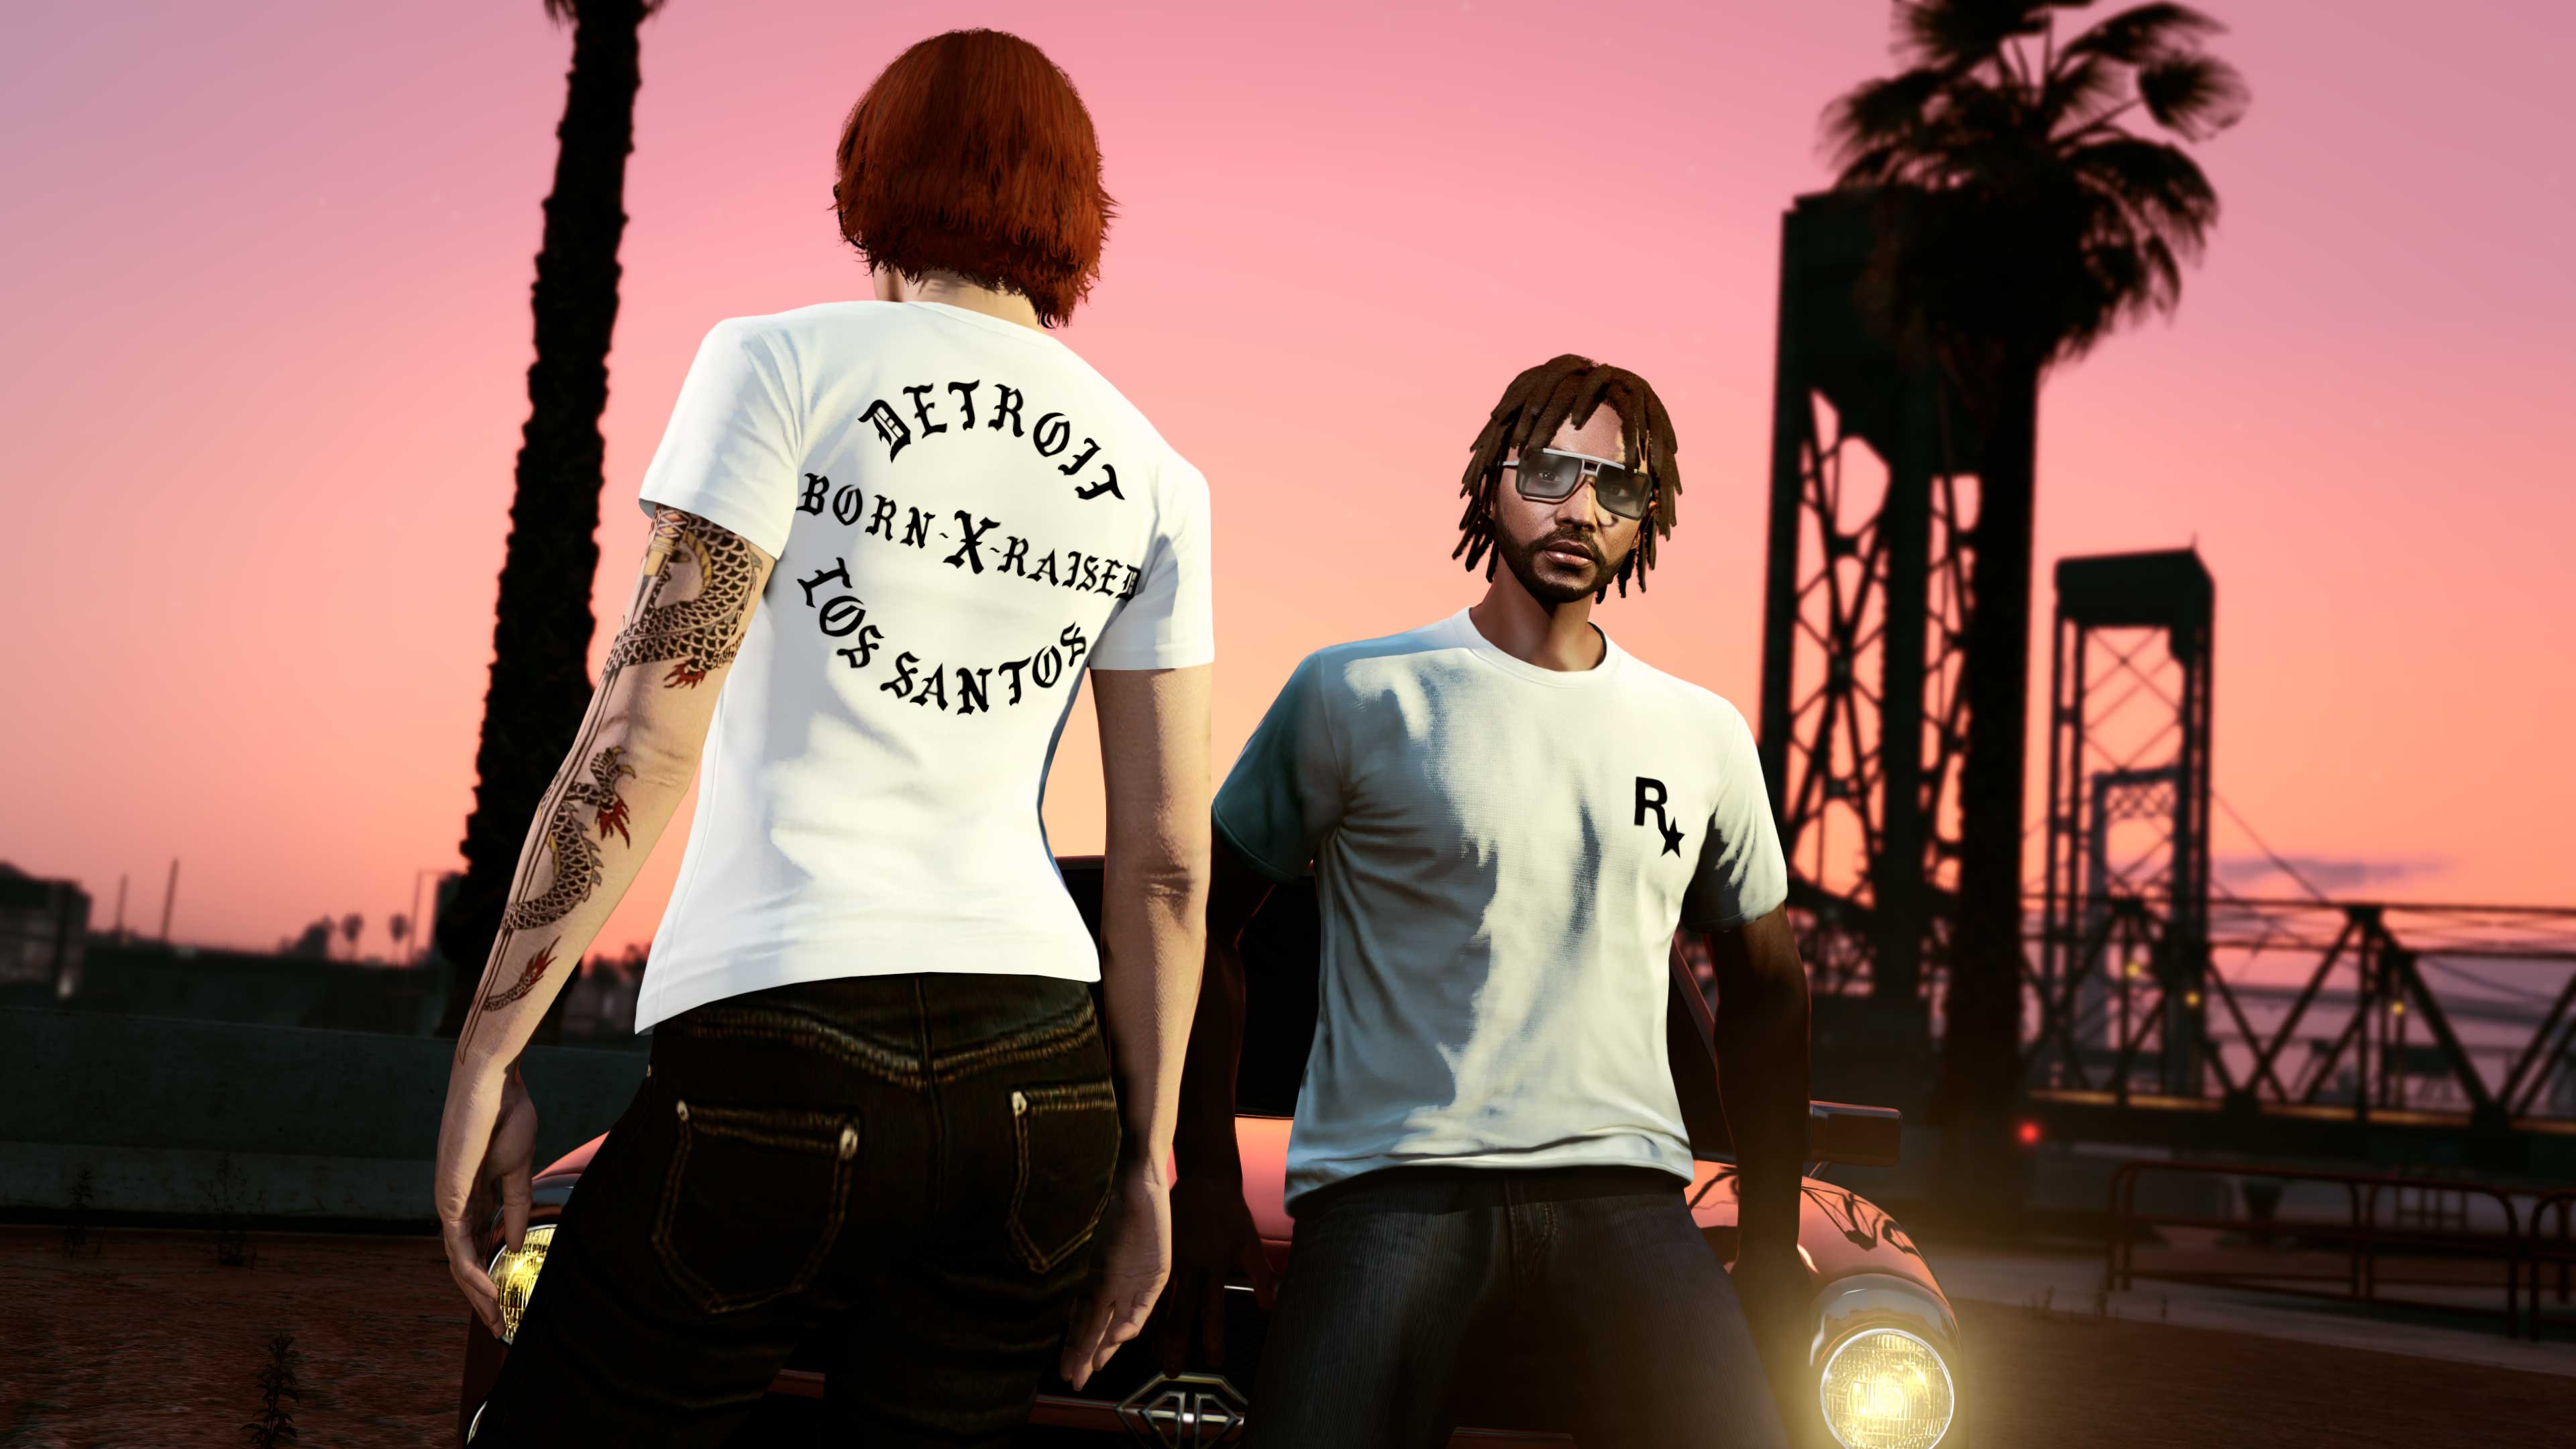 Personagens no GTA Online usando a camiseta Born x Raised branca